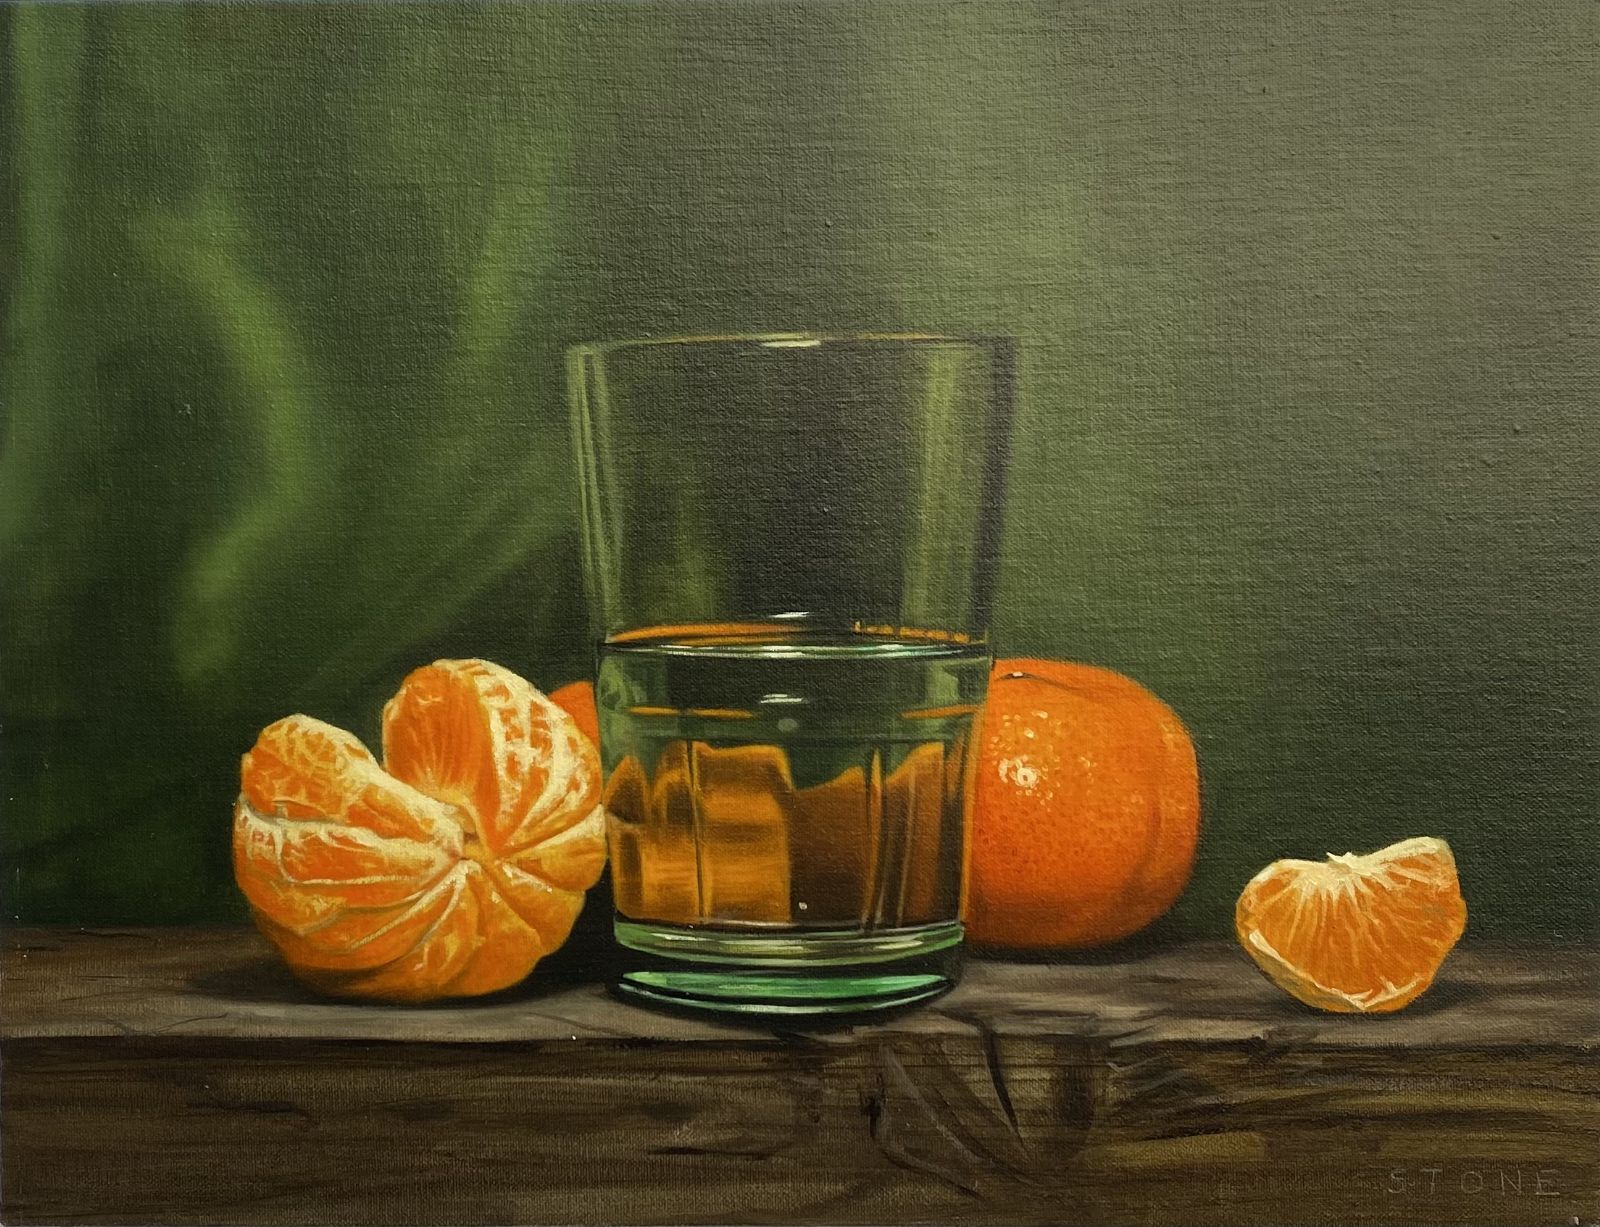 Orange on Green by Paul Stone